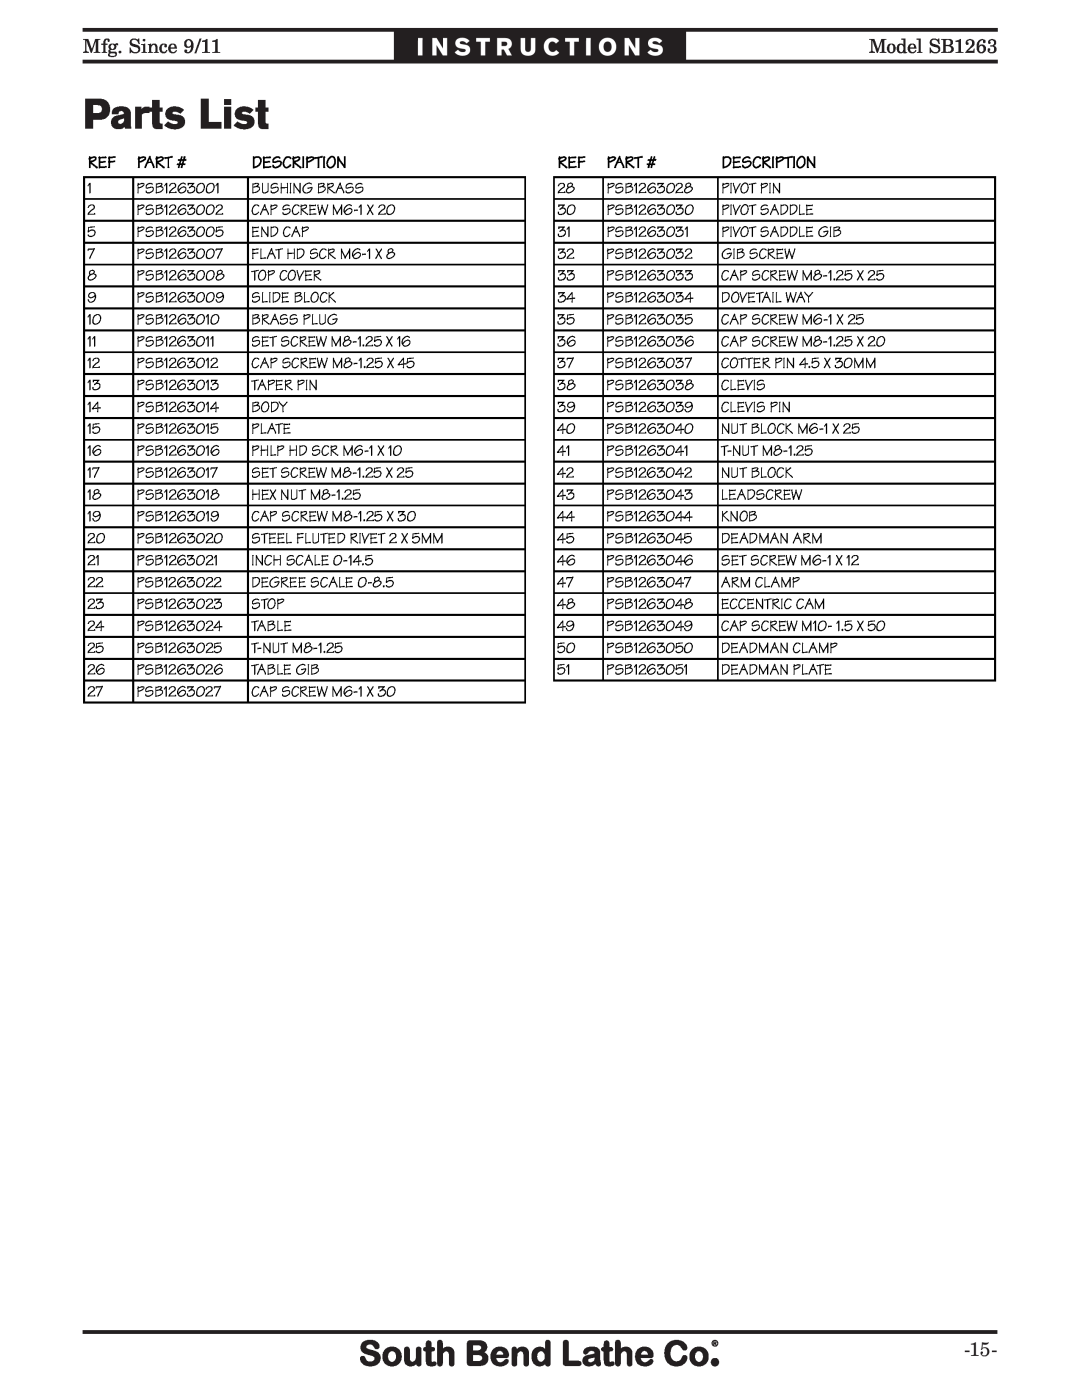 Southbend SB1263 instruction sheet Parts List, I N S T R U C T I O N S, Part #, Description 